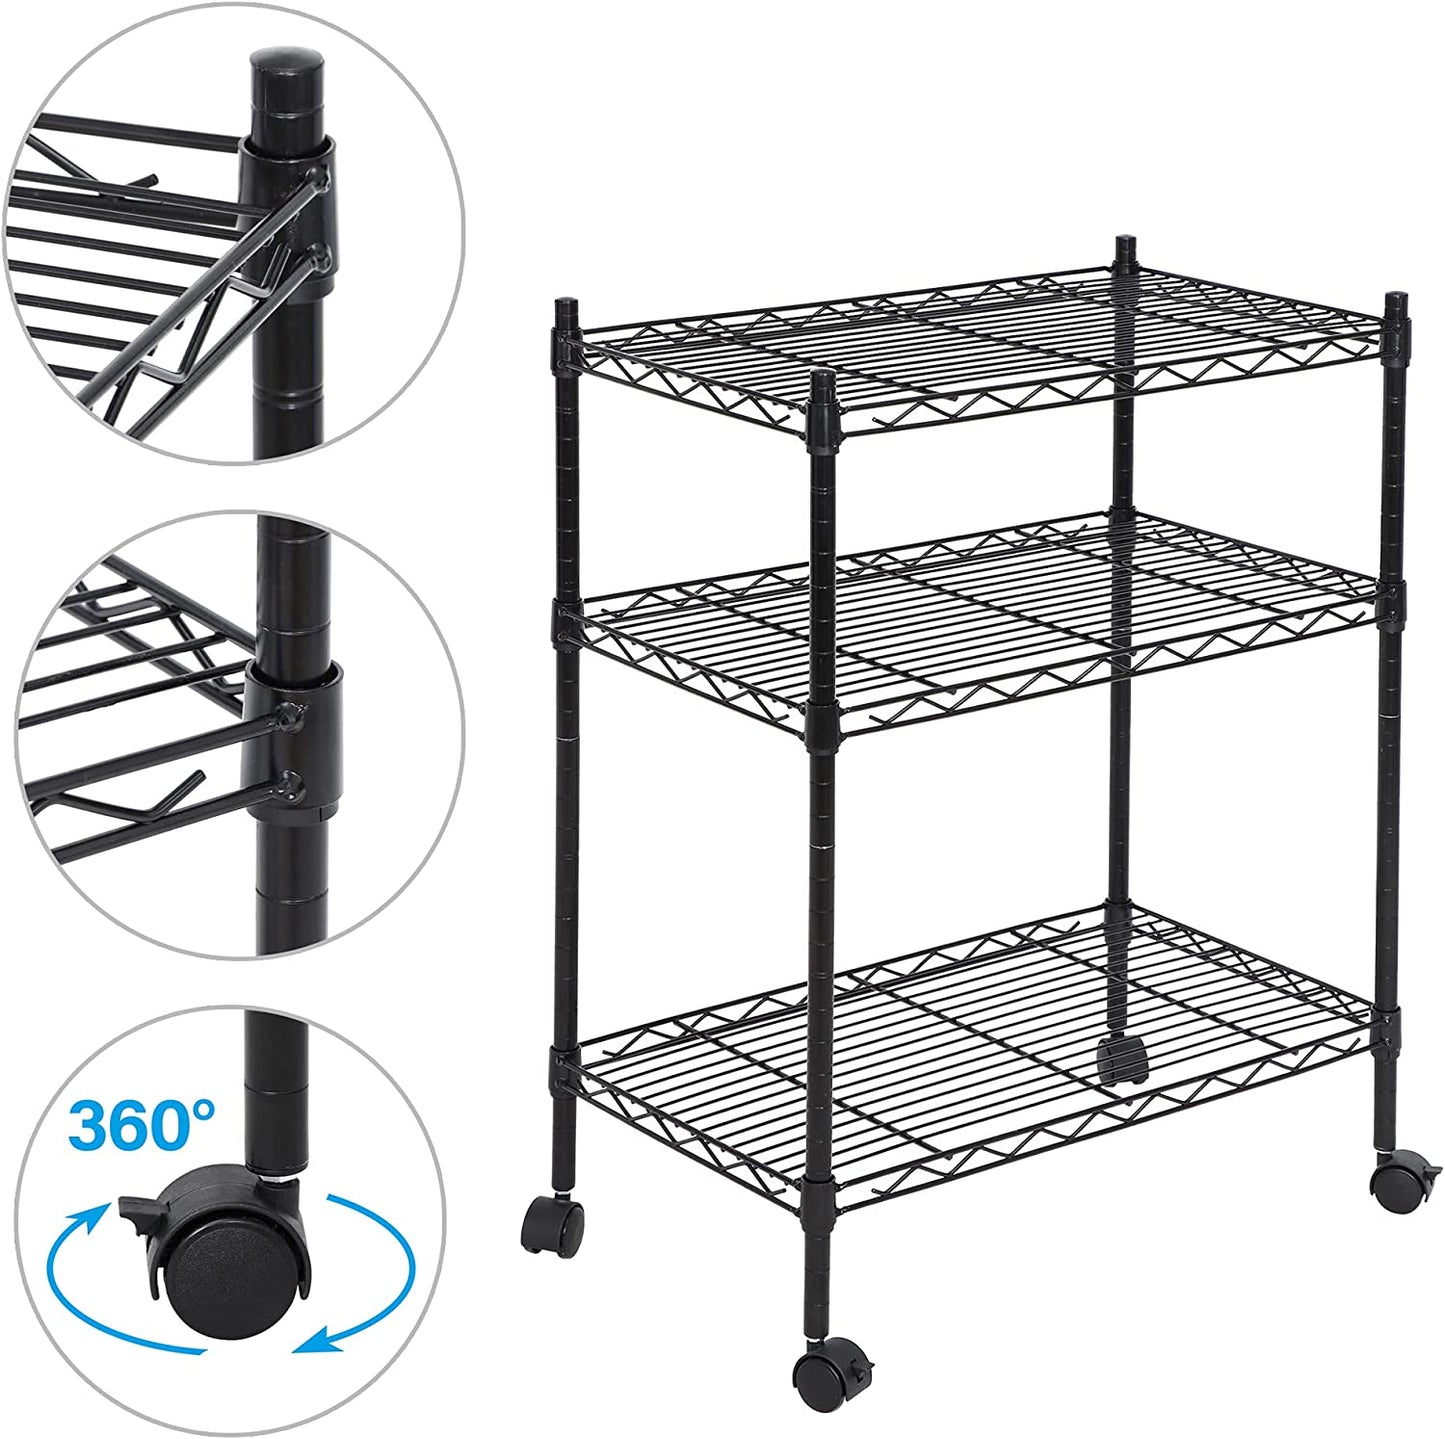 3-Shelf Heavy Duty Shelving Storage Unit with Casters, Metal Organizer Wire Rack for Kitchen, Office, Garage, Black